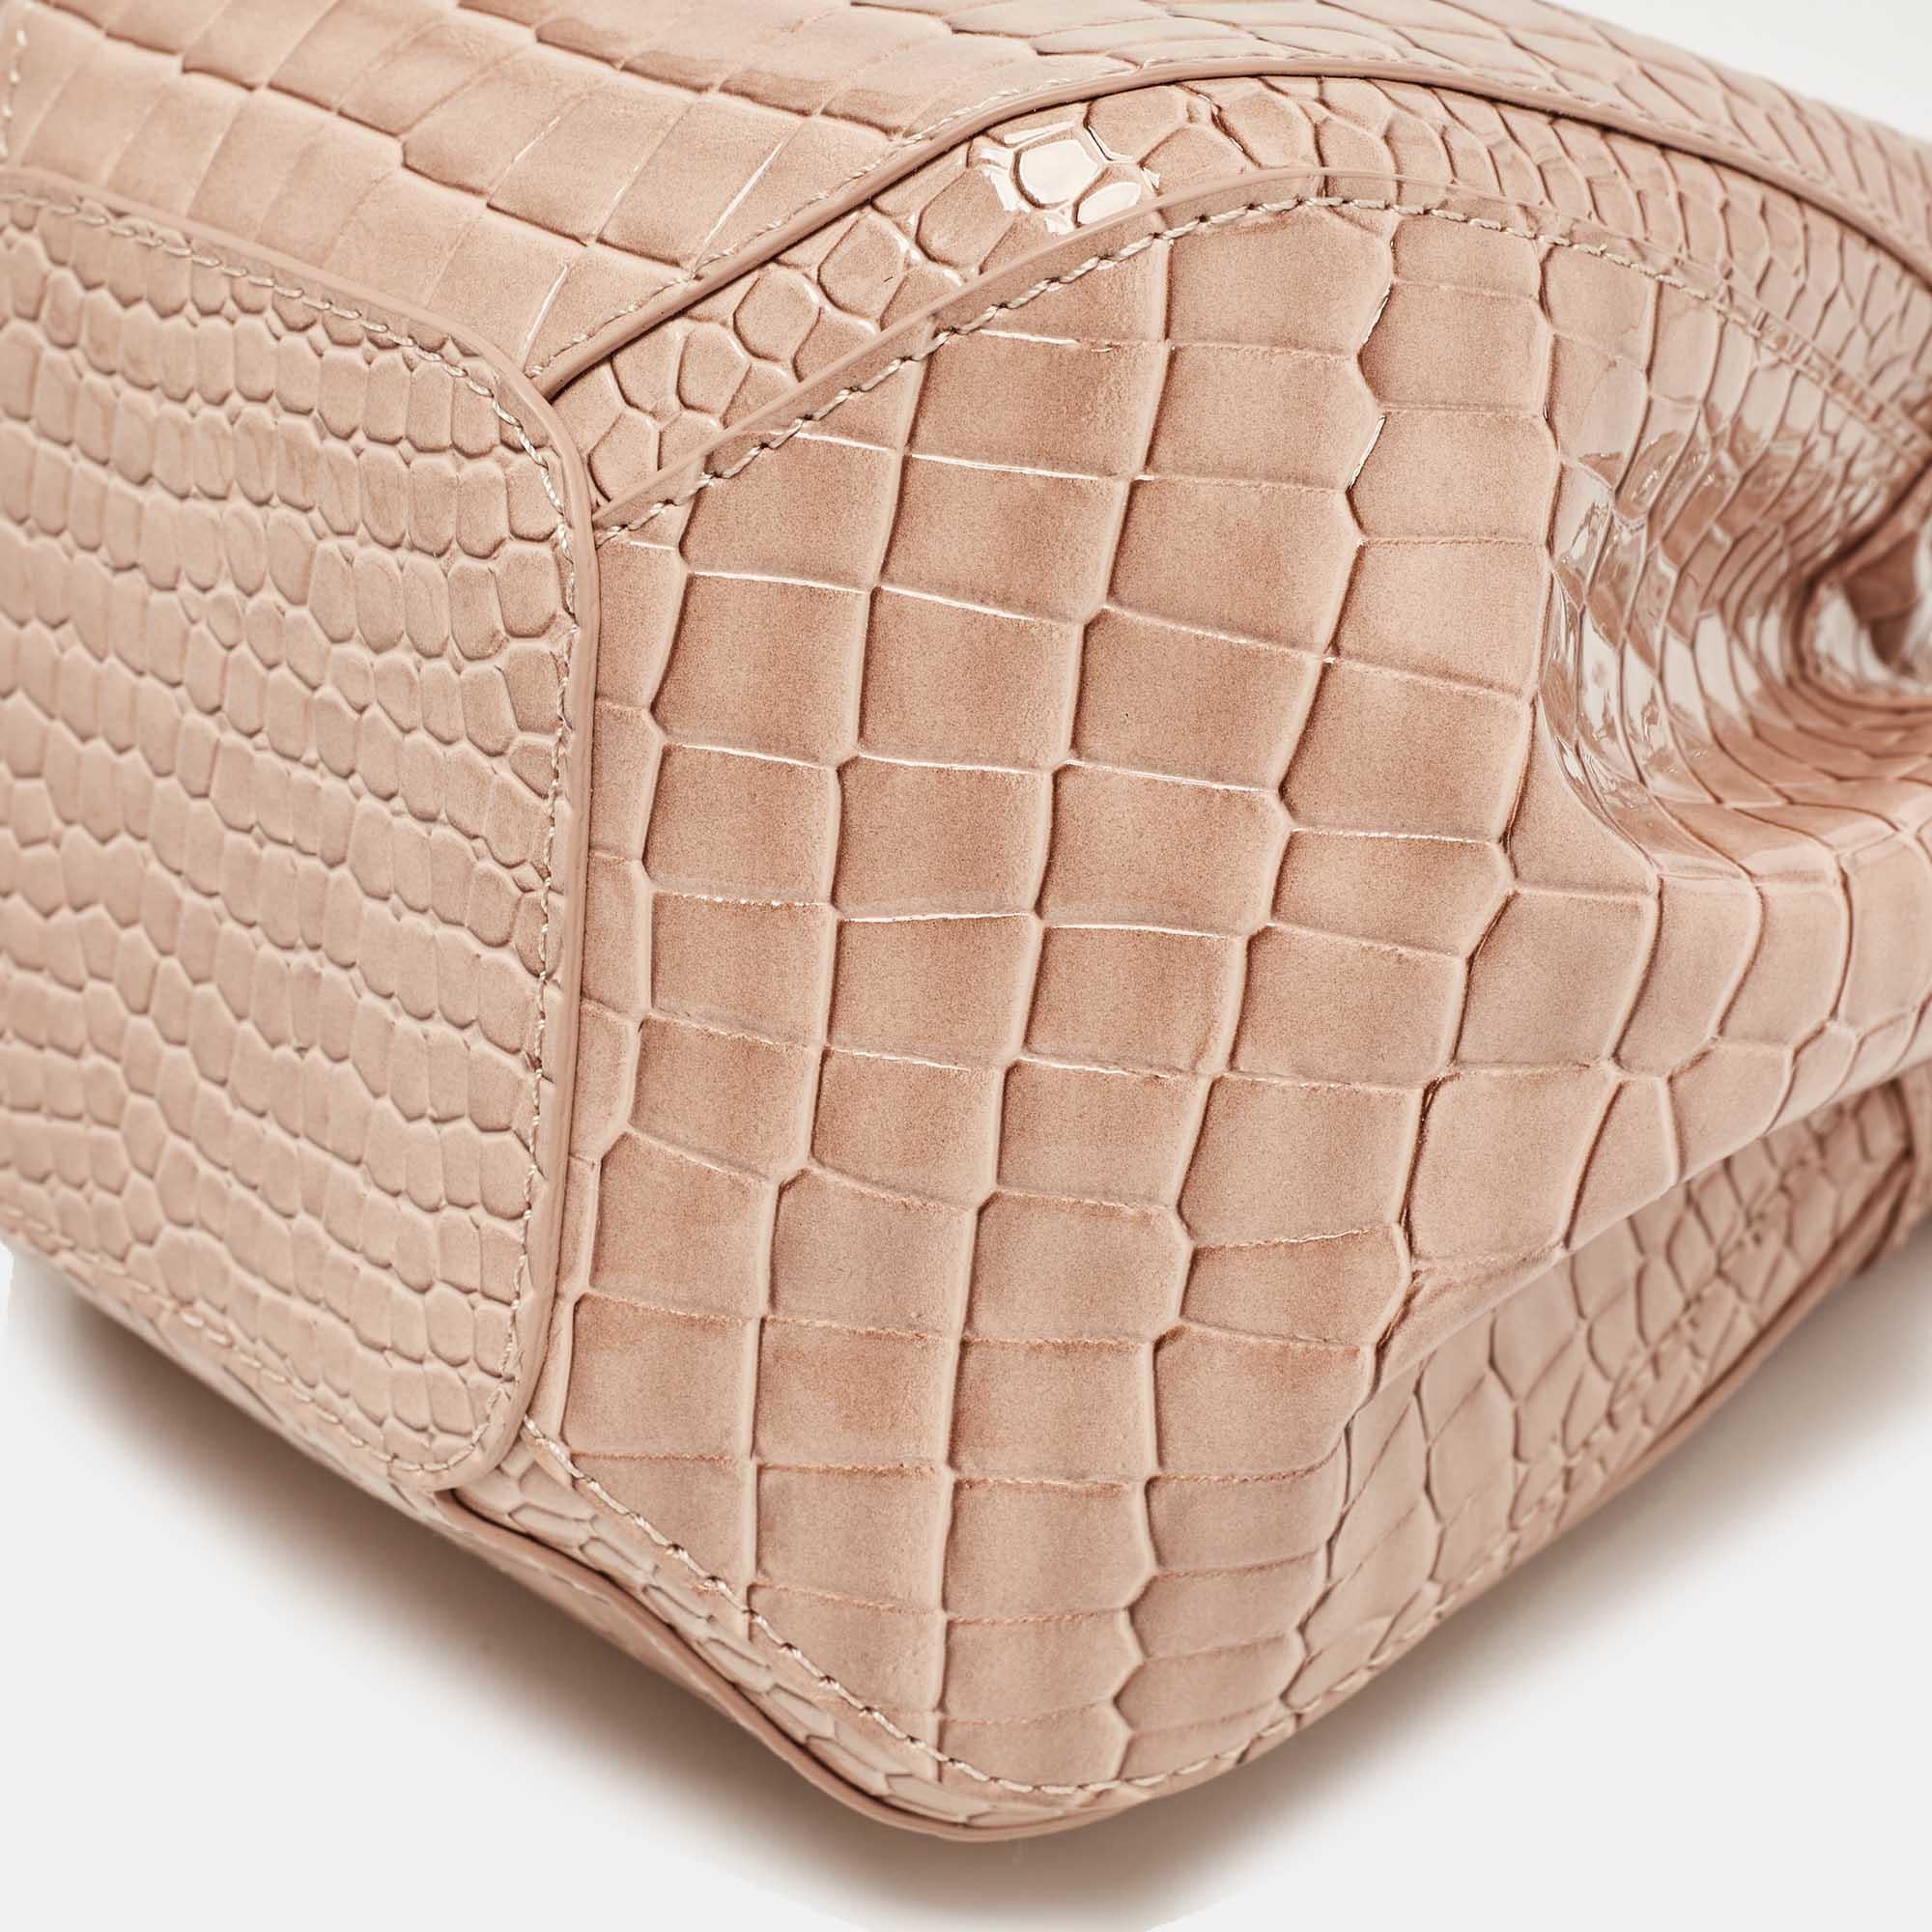 Vivienne Westwood Pink Croc Embossed Leather Chrissy Bucket Bag 5